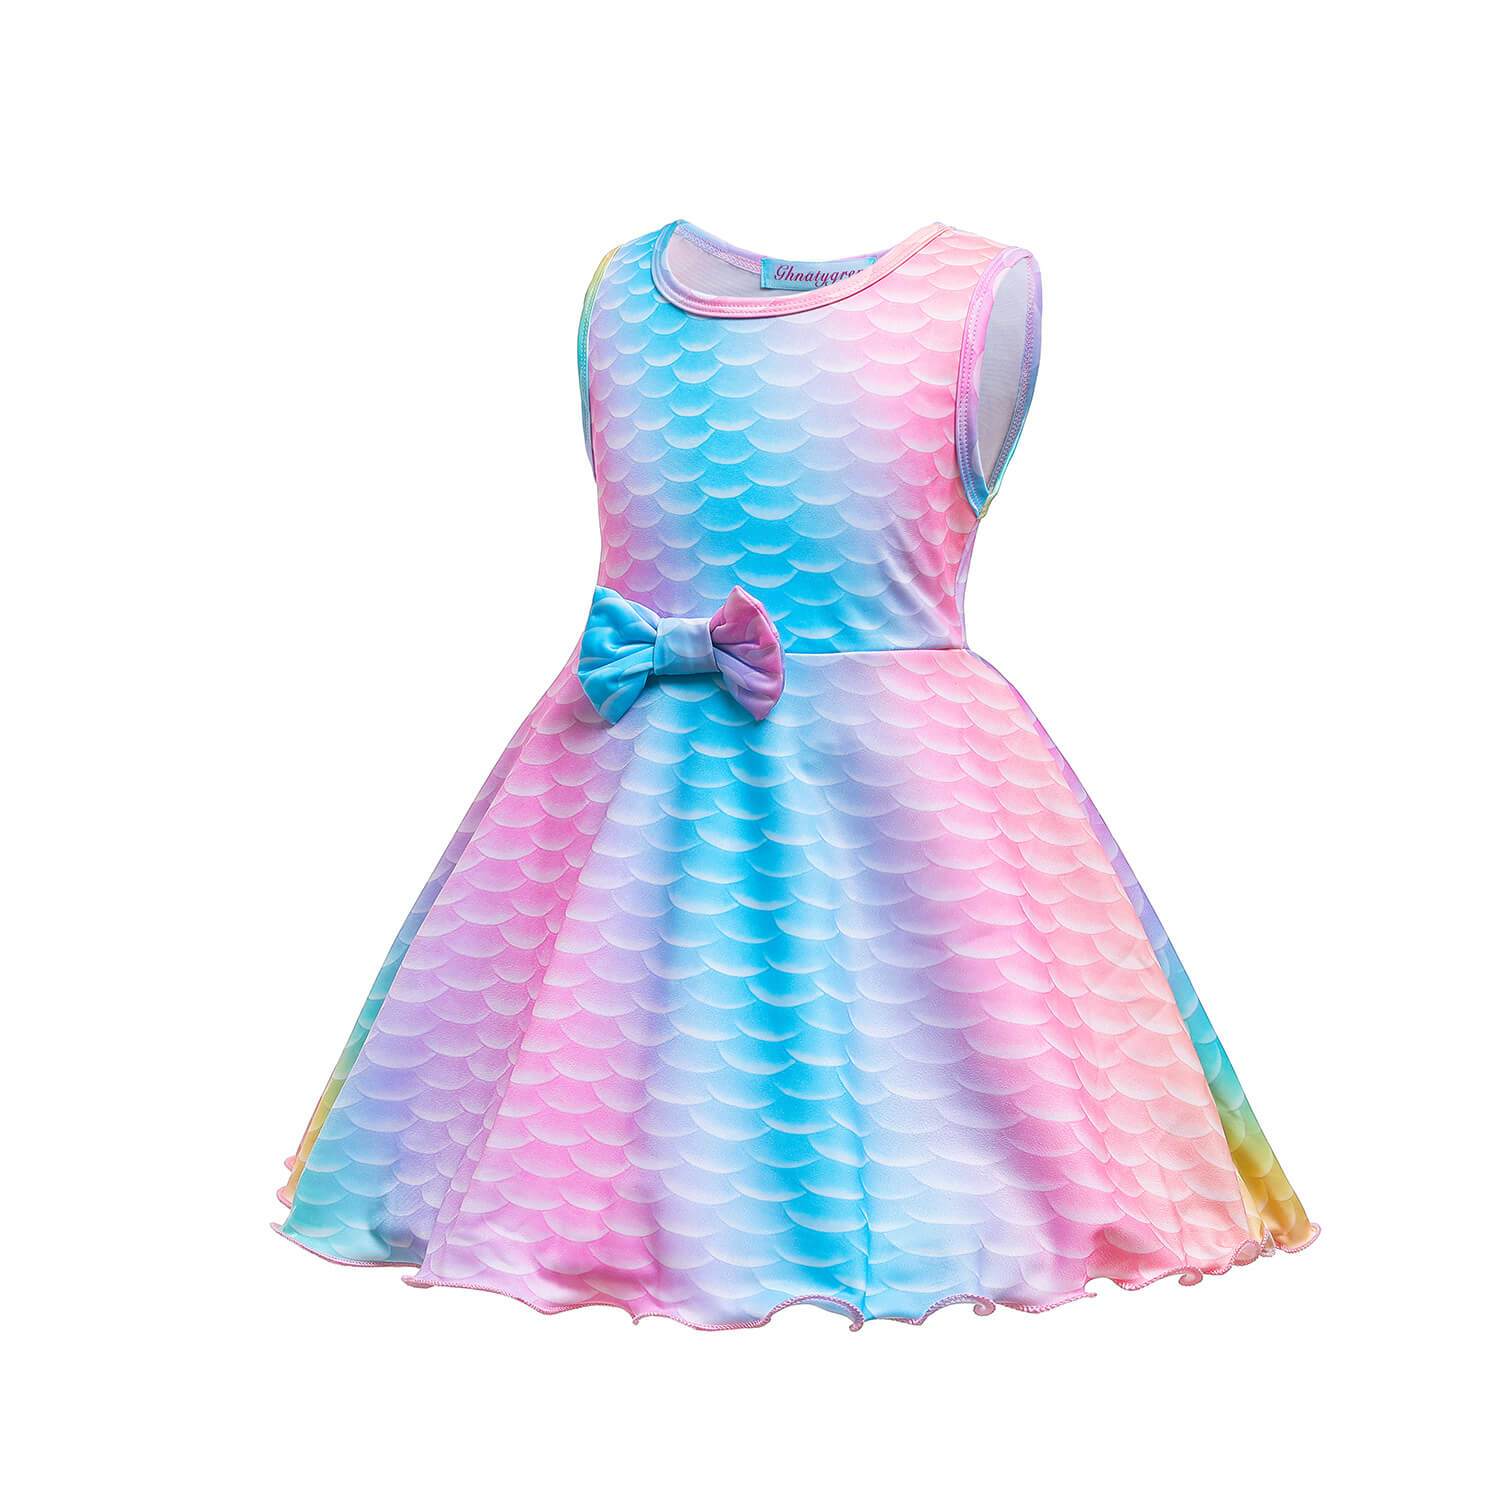 Girls Mermaid Dress Daily Wear Princess Dress Sea Rainbow Dress Up Outfit